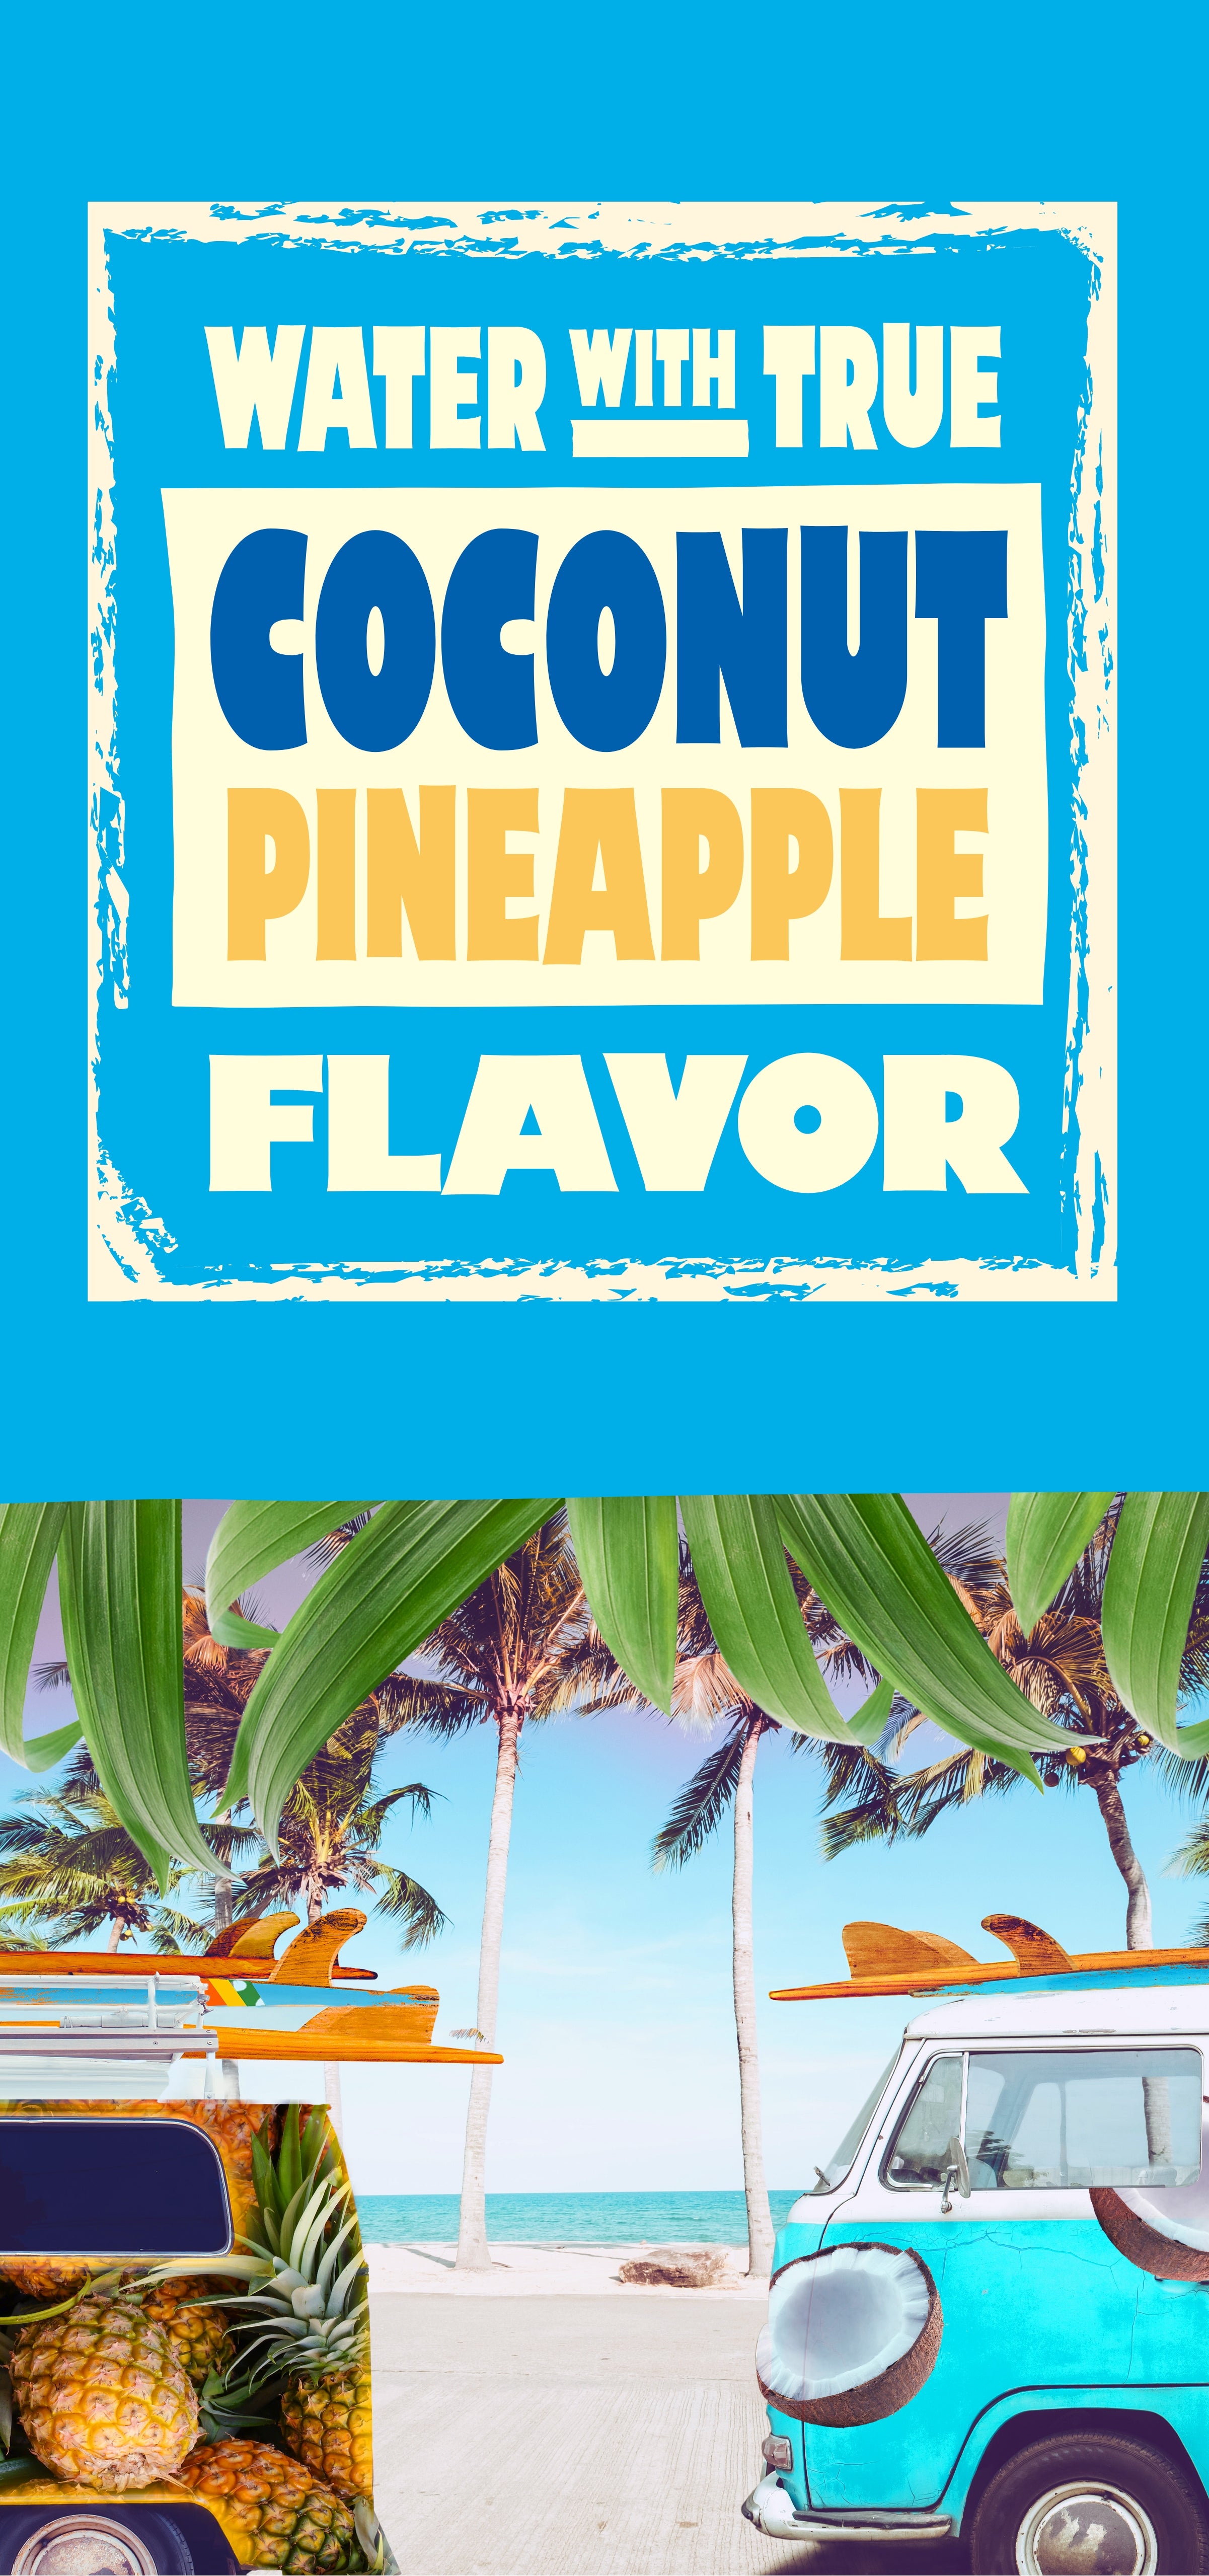 Water with true coconut pineapple flavor